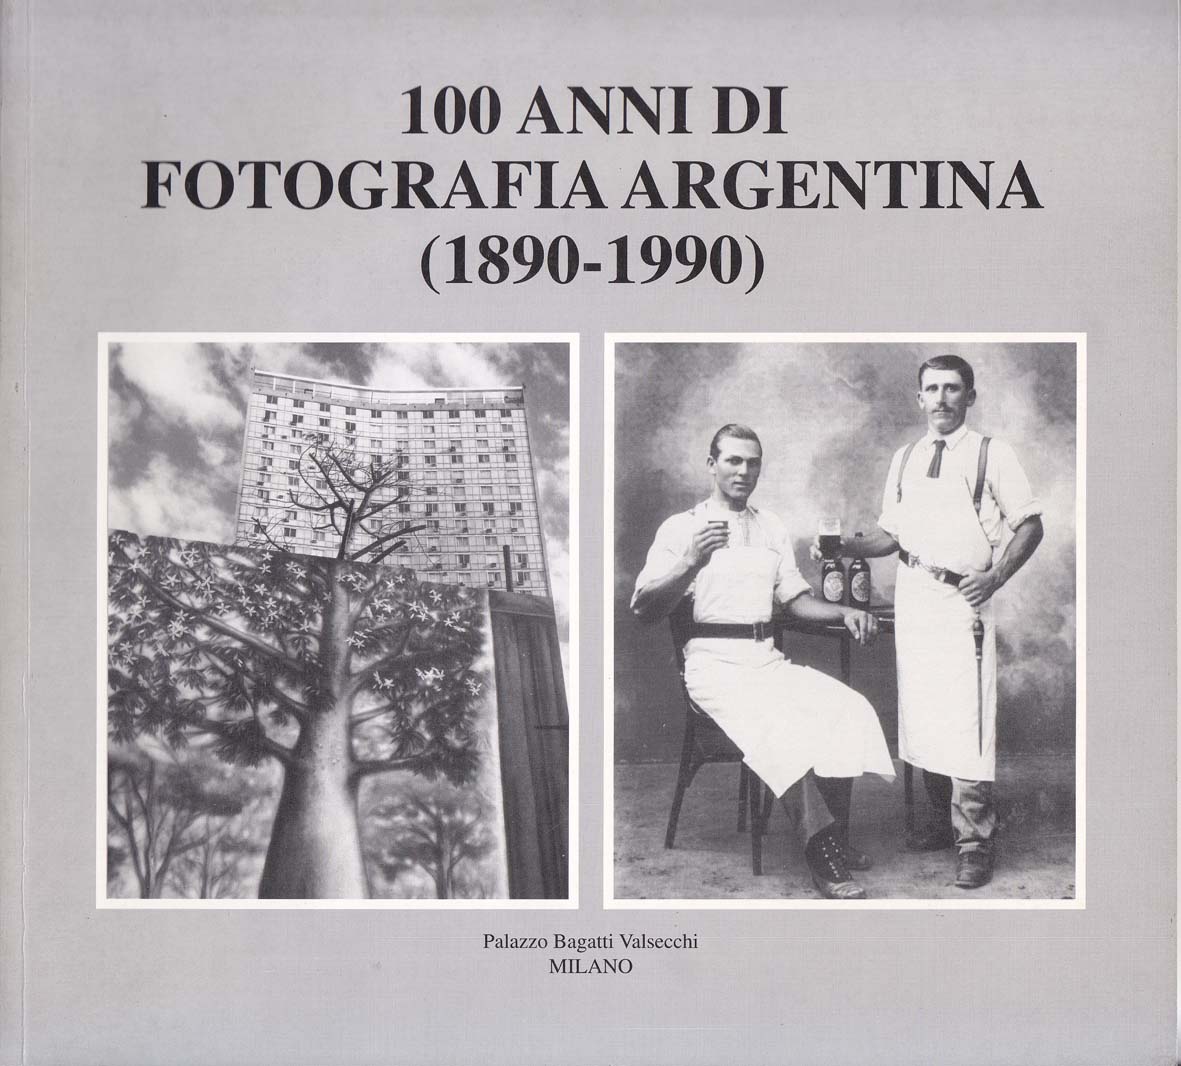 100 anni di fotografia argentina (1890-19990)